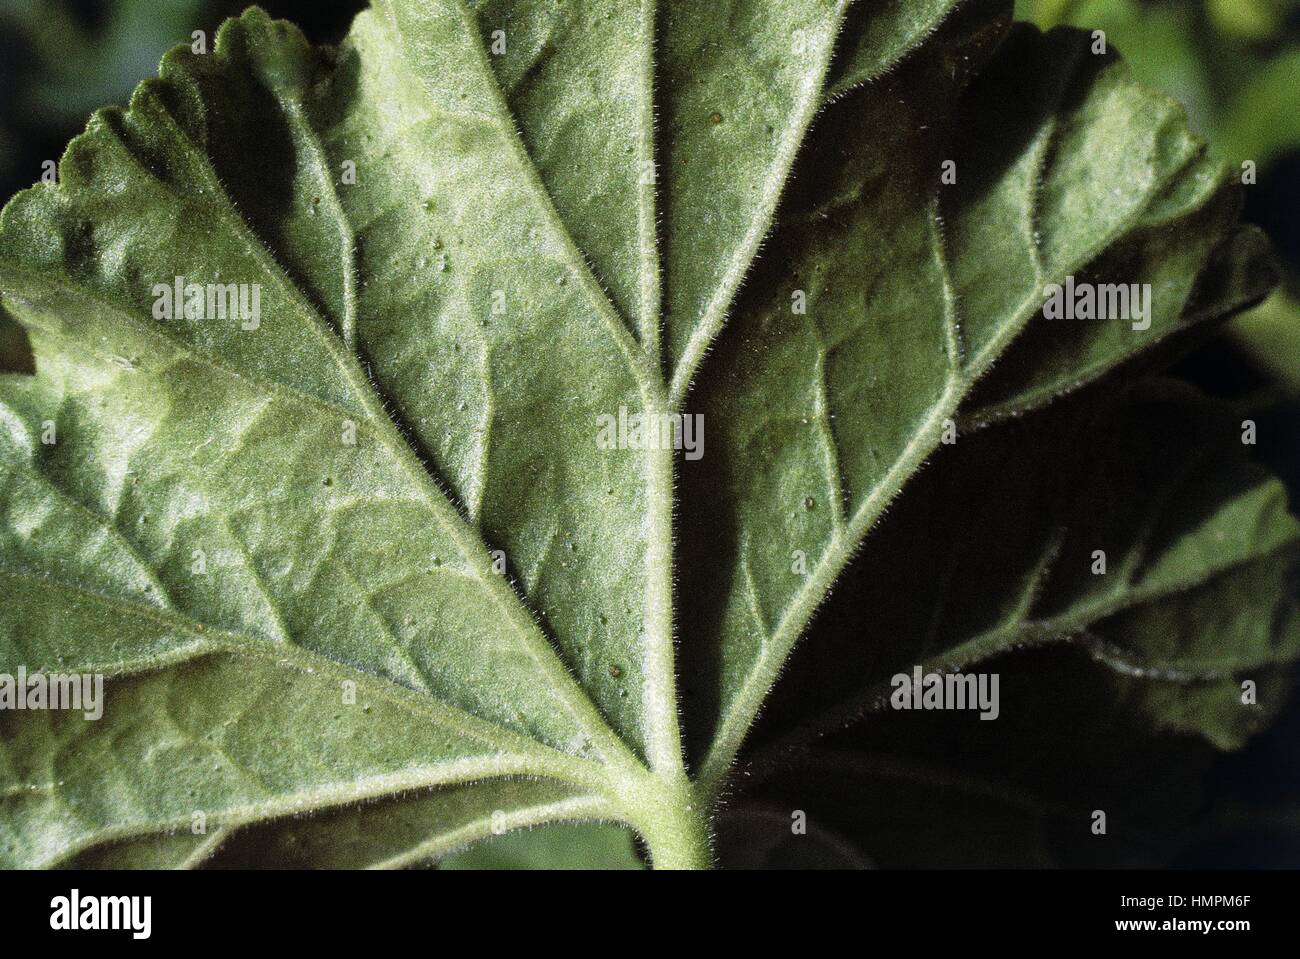 Ribs on the underside of a Geranium leaf (Pelargonium sp), Geraniacee. Stock Photo